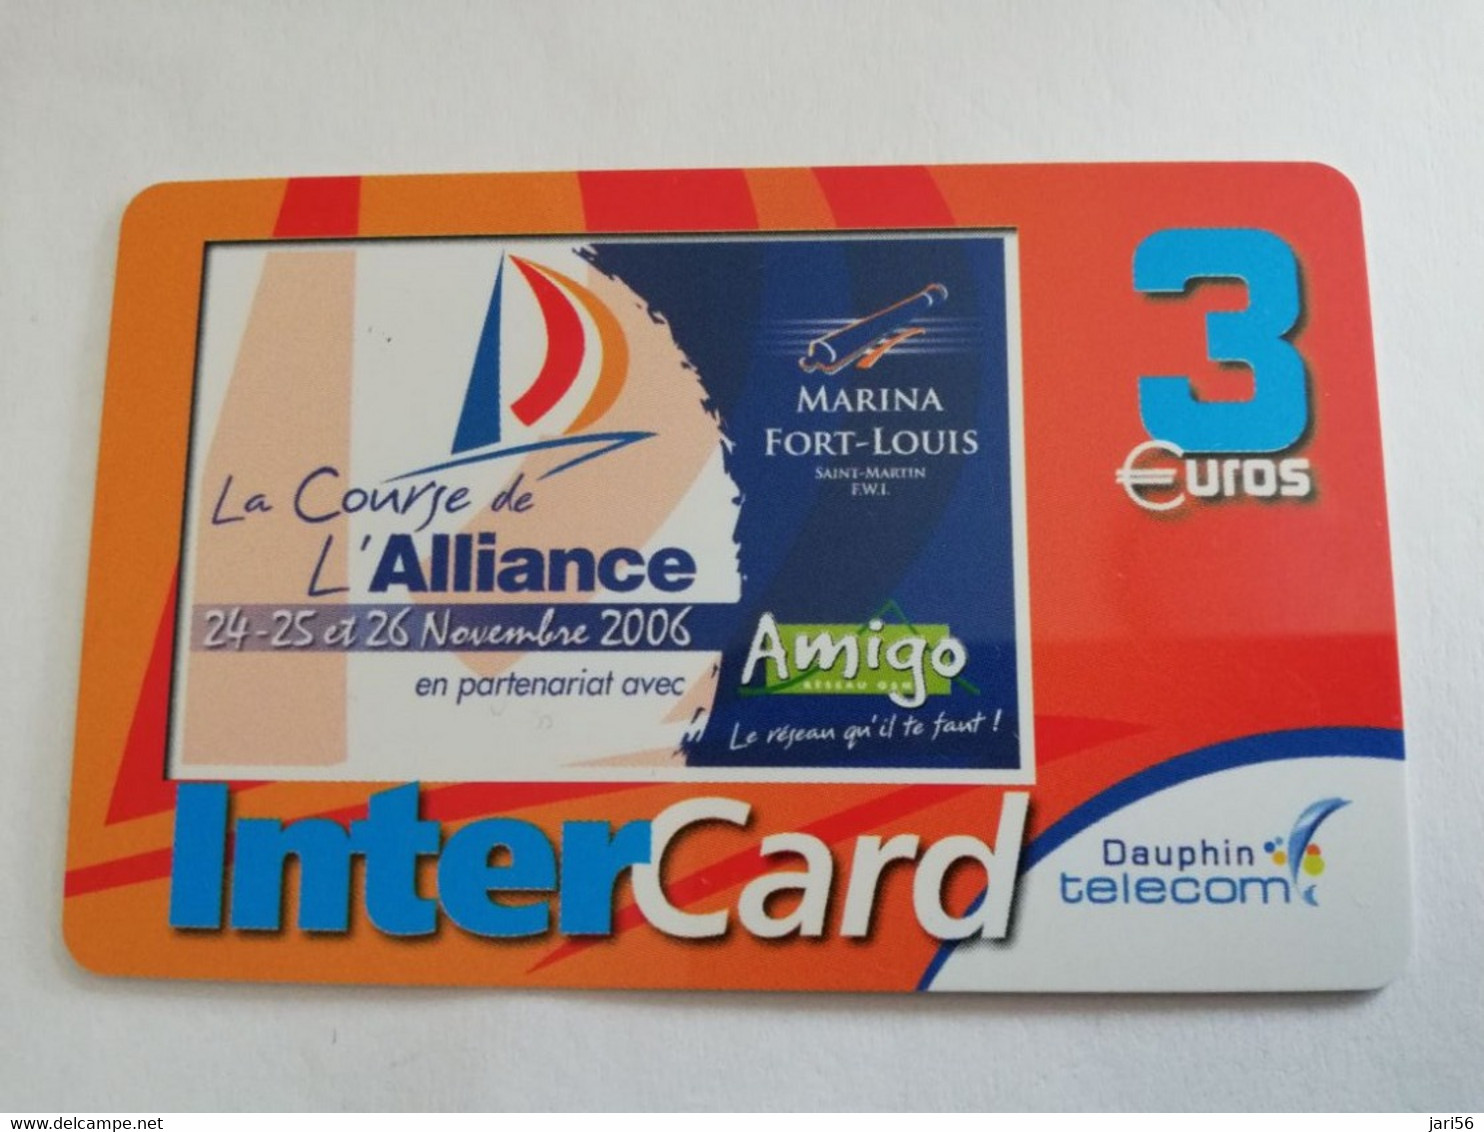 ST MARTIN / INTERCARD  3 EURO    LE COURSE DE ALLIANCE          NO 156   Fine Used Card    ** 6605 ** - Antille (Francesi)